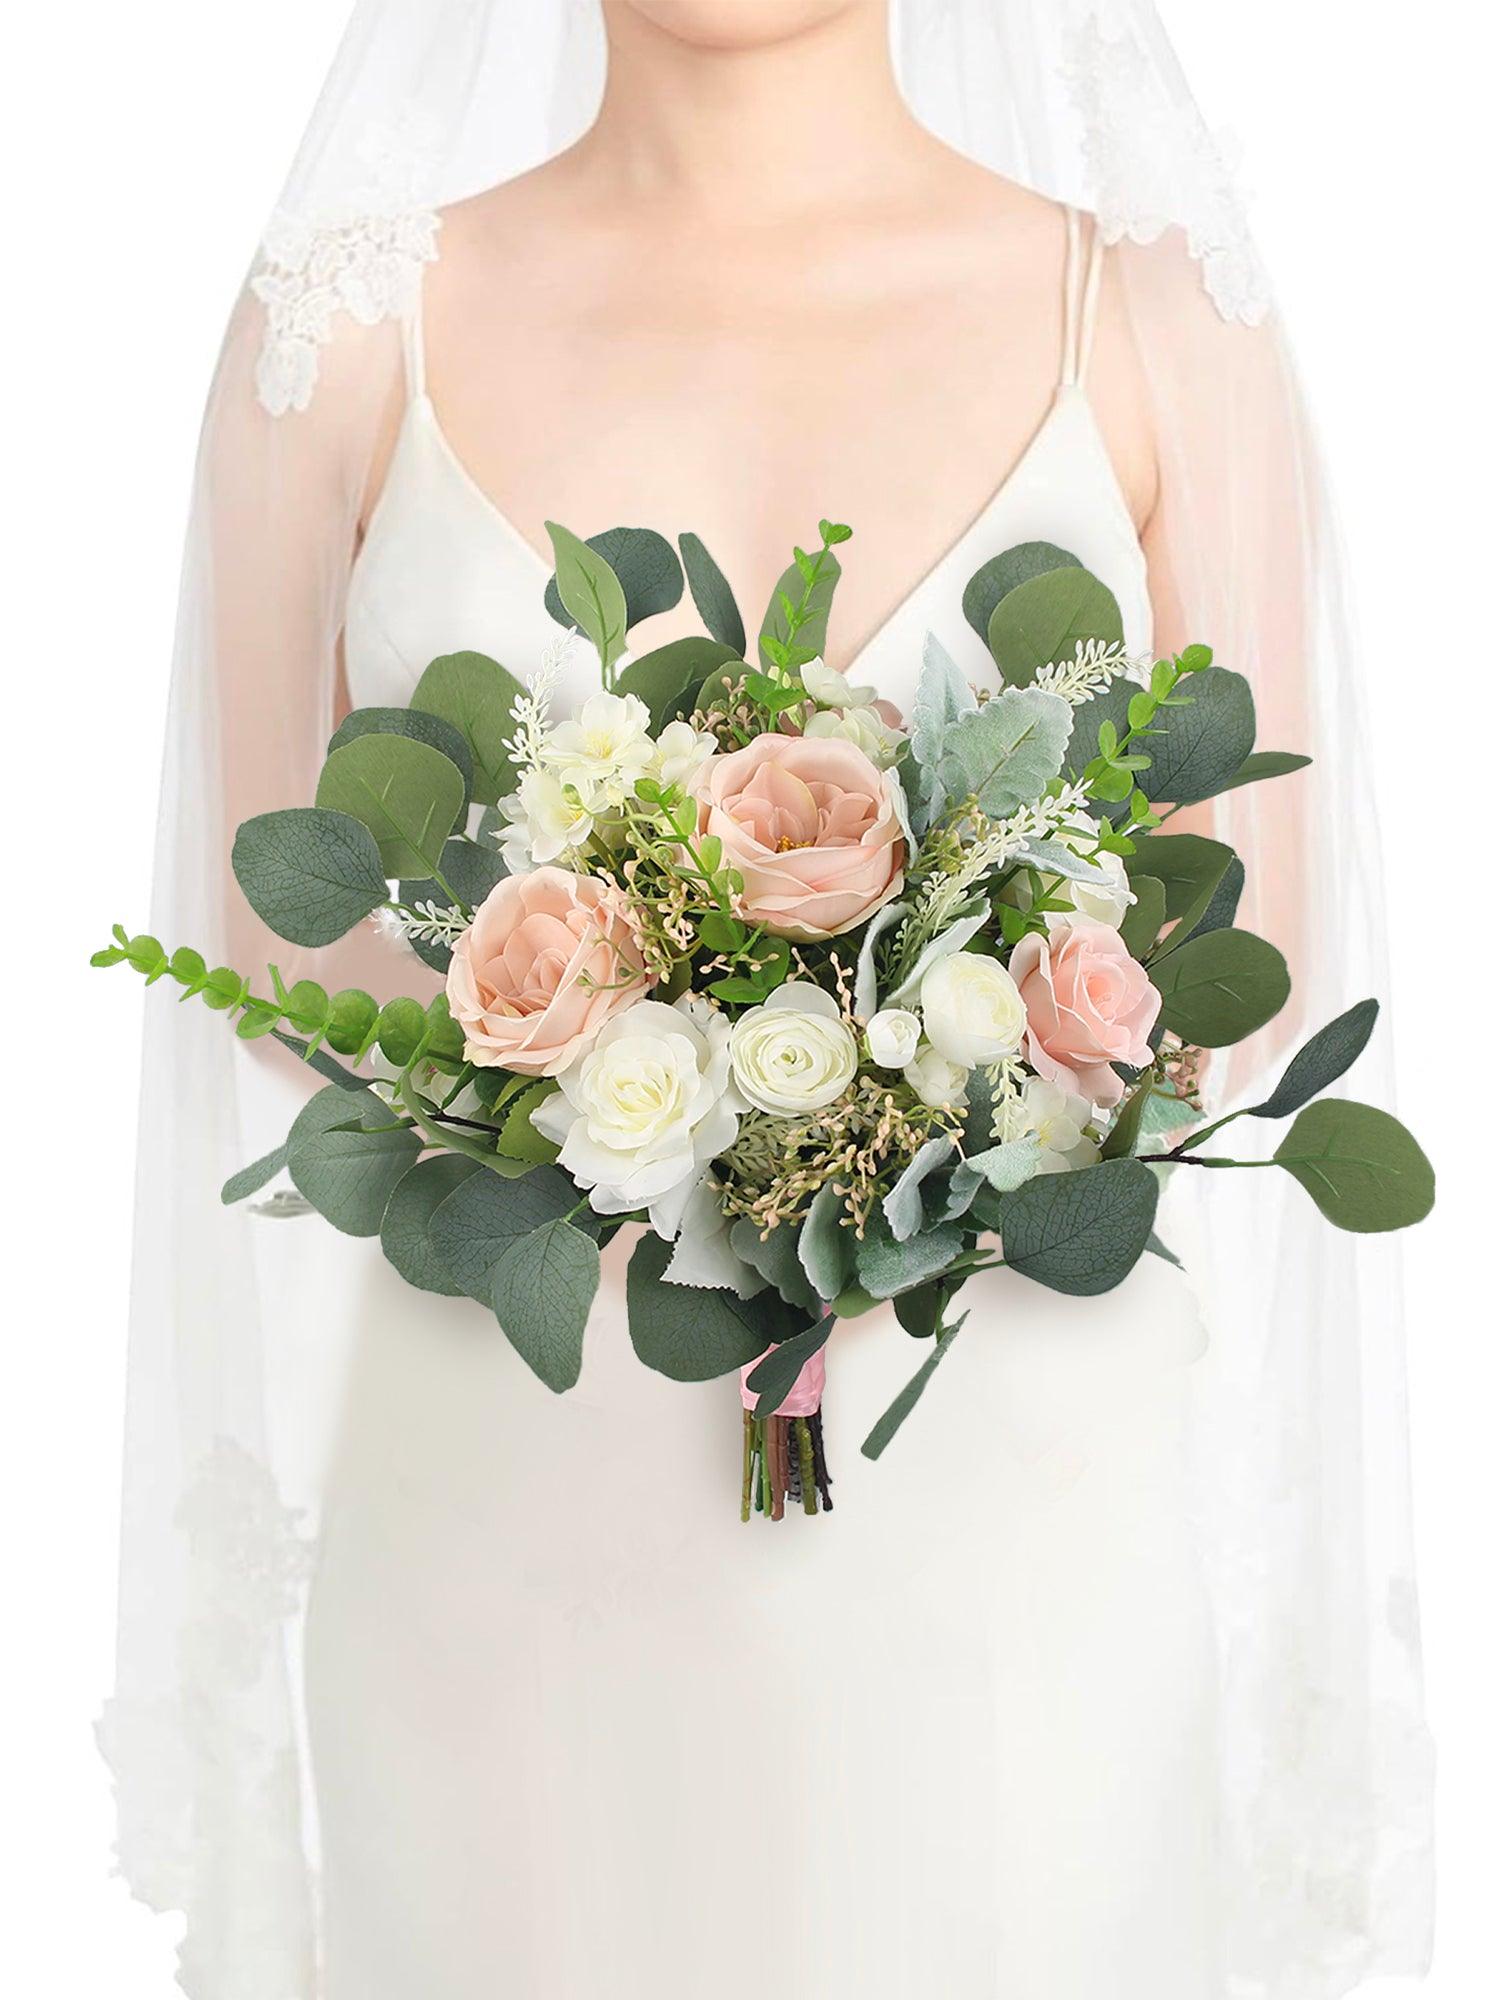 12.6 inch wide Blush Pink & White Bridal Bouquet